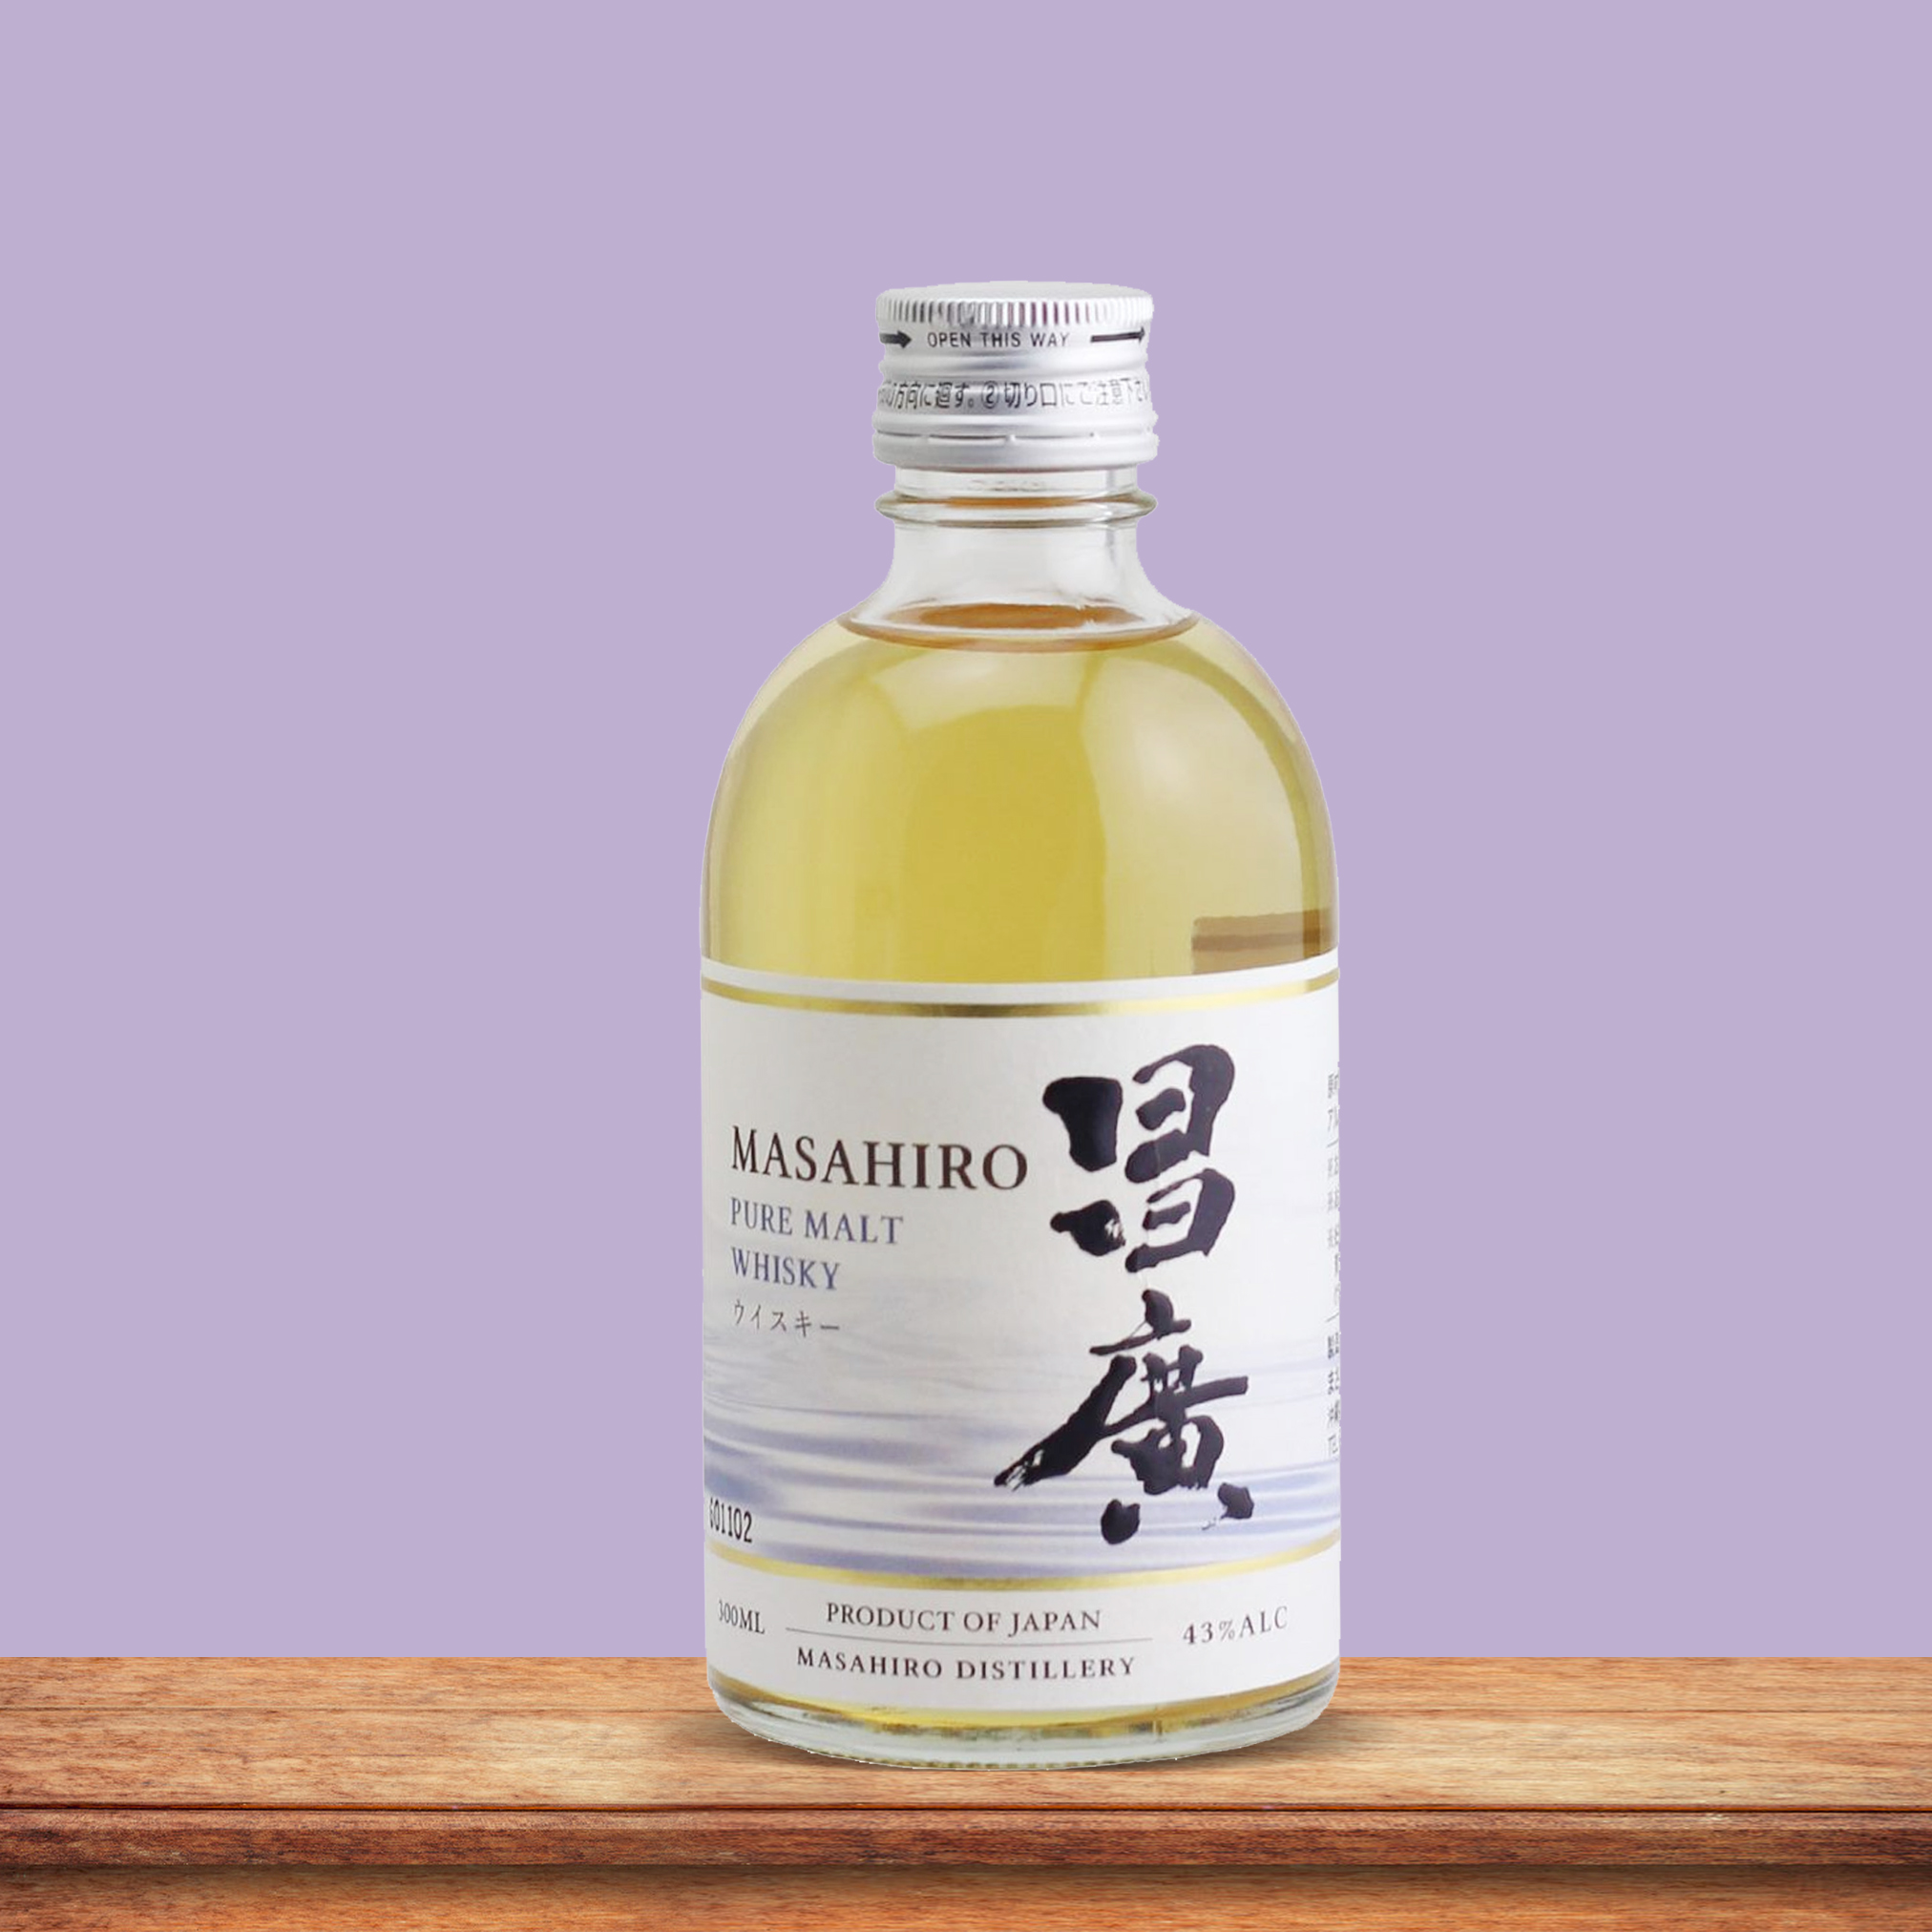 Masahiro Pure Malt Whisky 43% 300ml